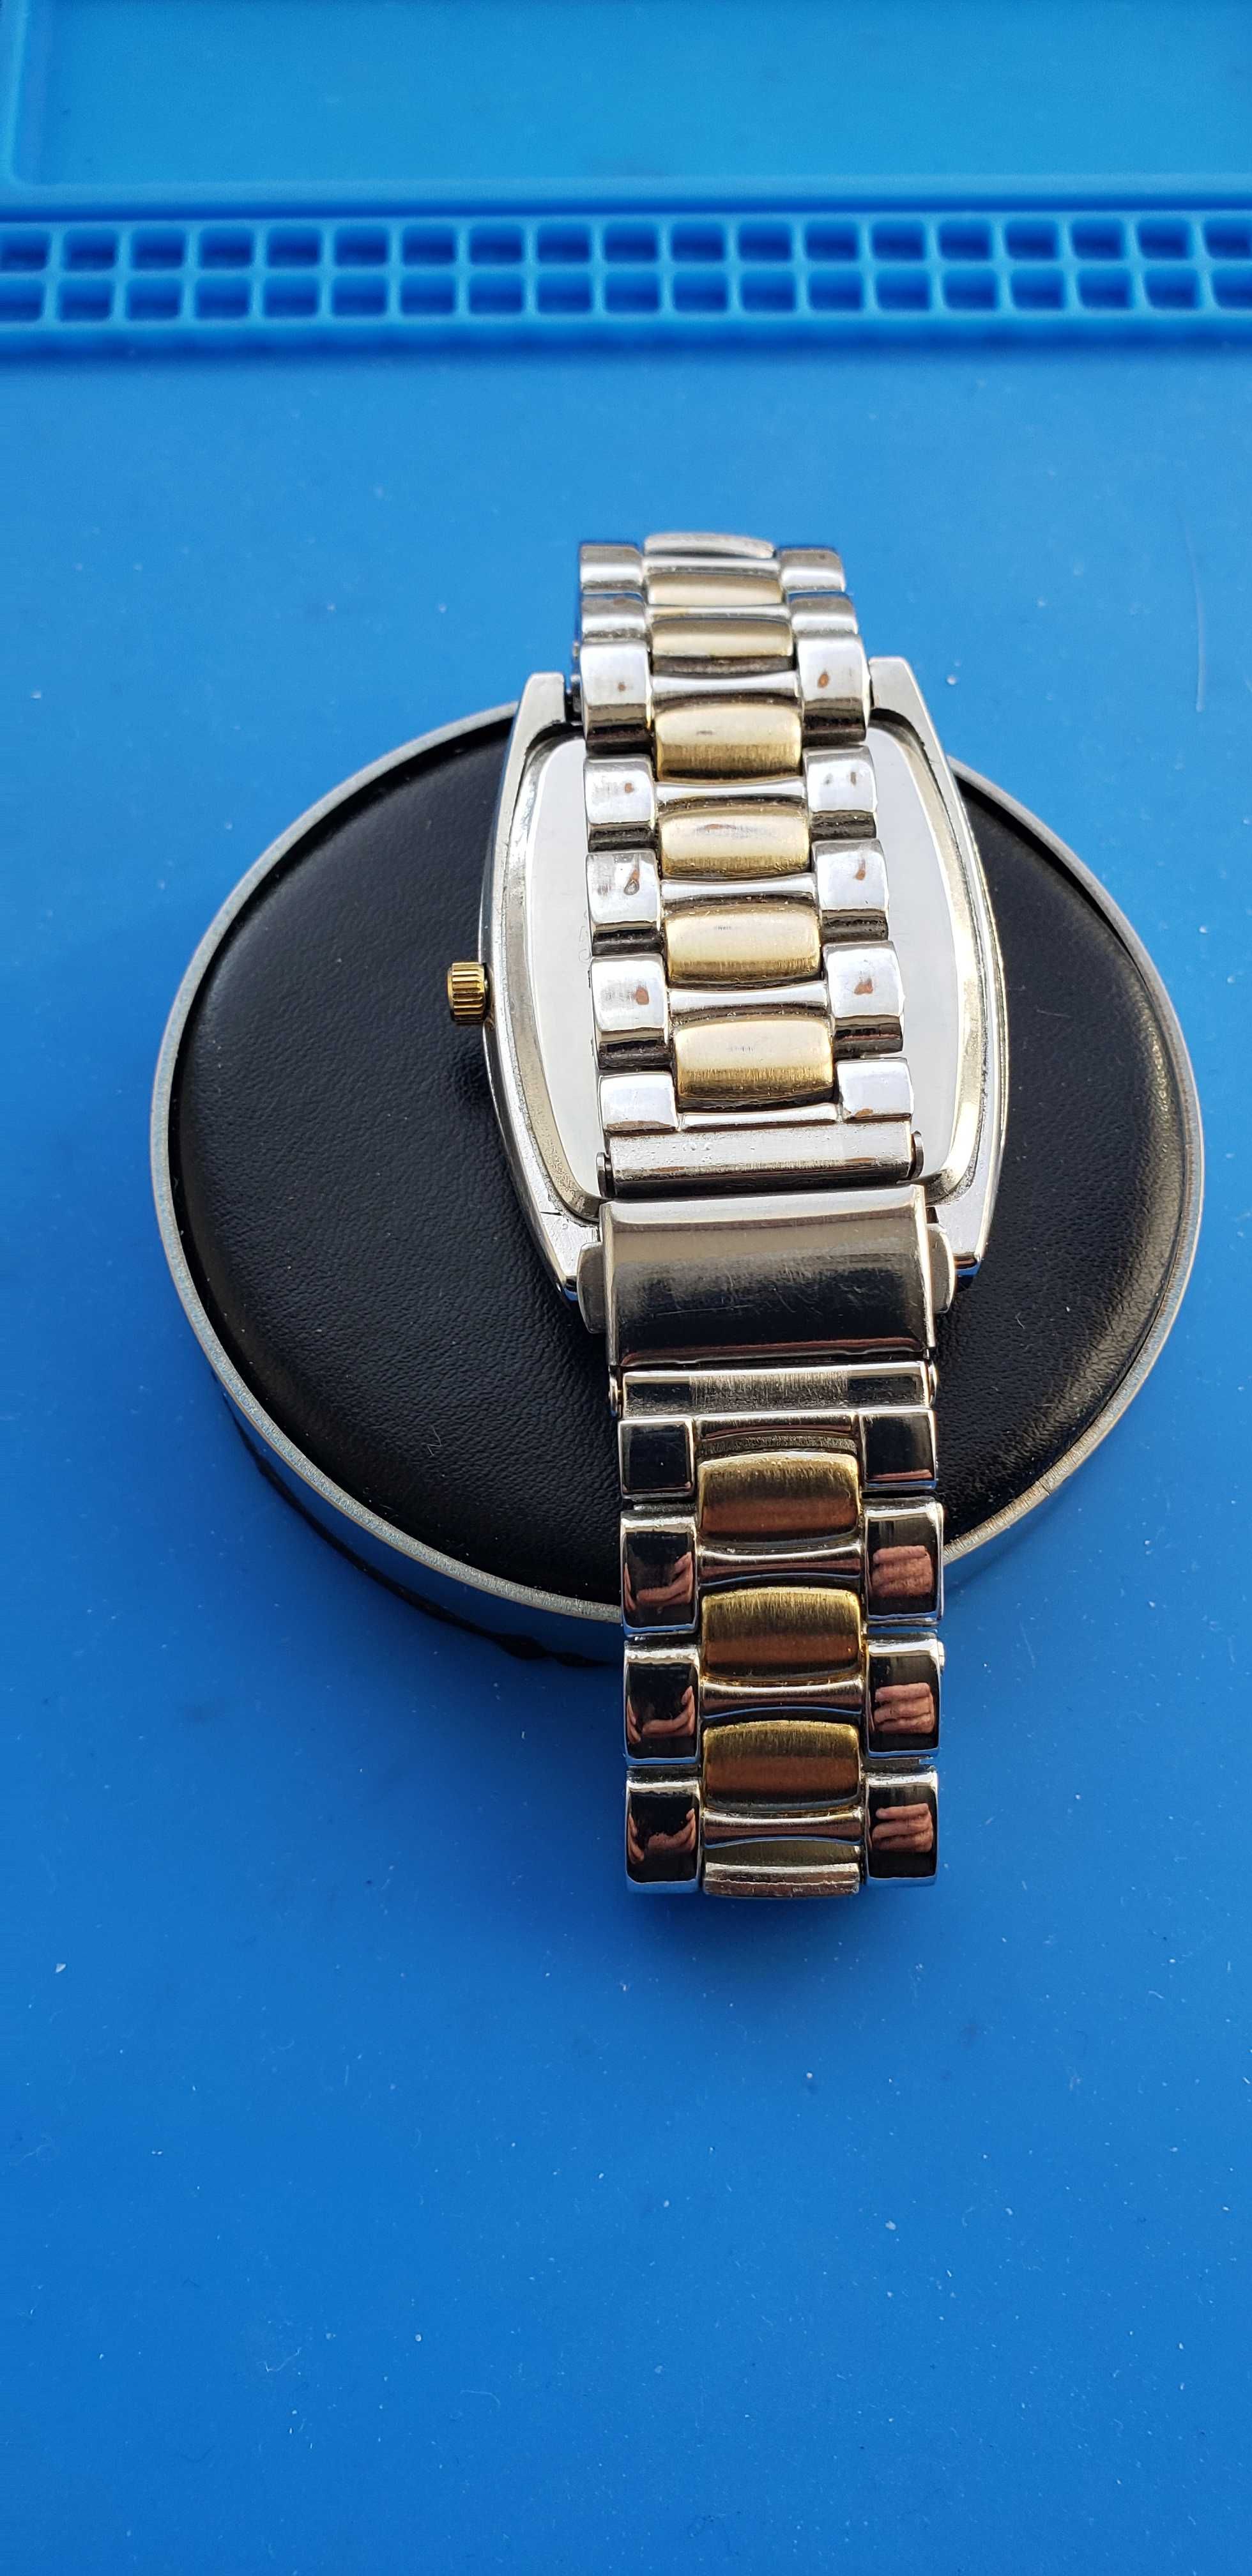 часы Louis Arden и женские часы Timex